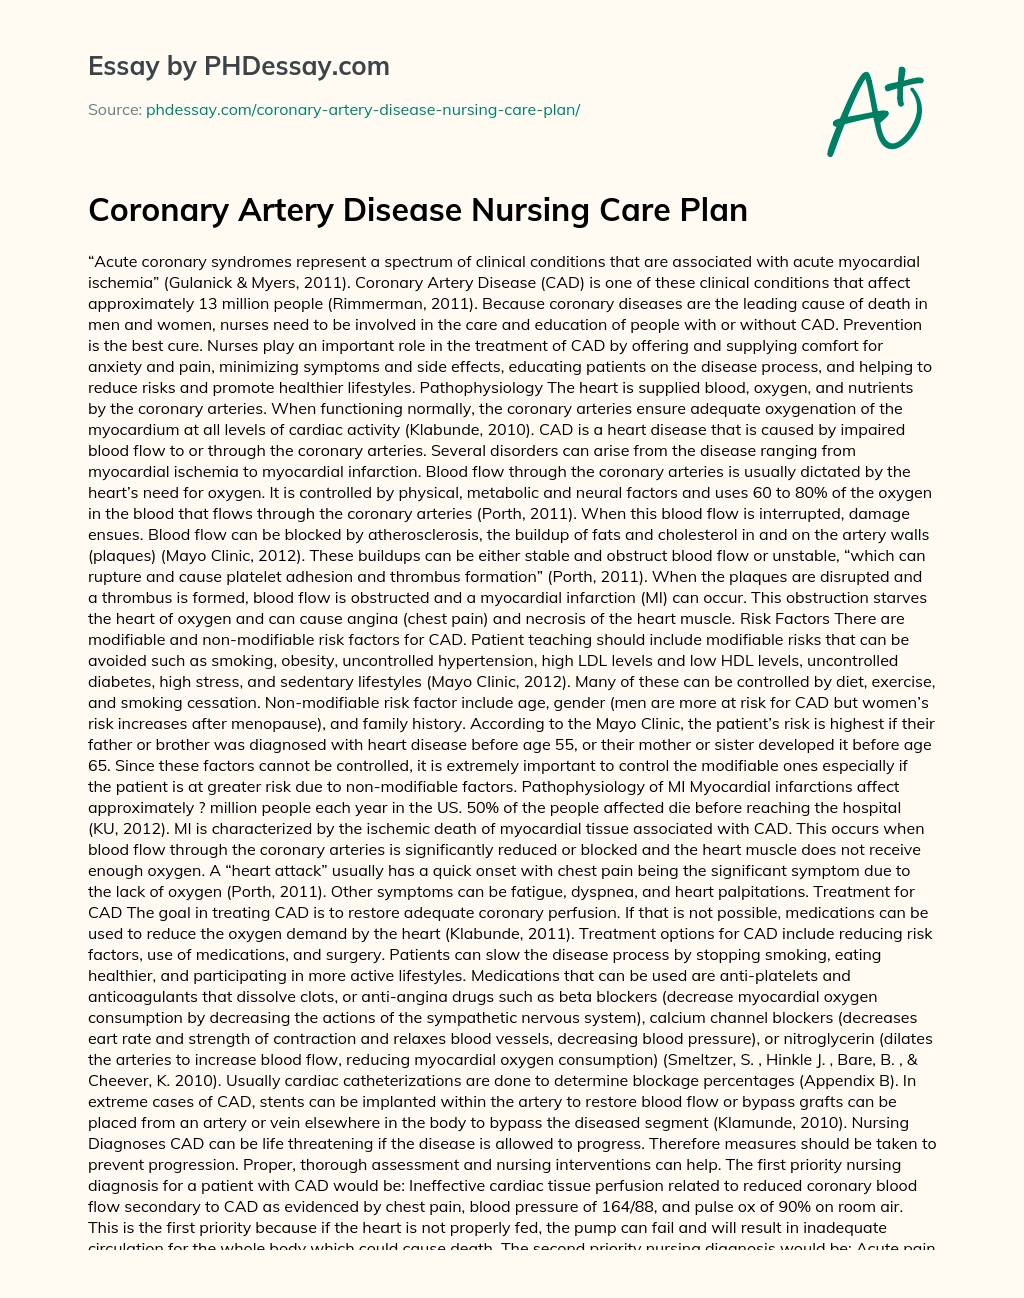 Coronary Artery Disease Nursing Care Plan essay